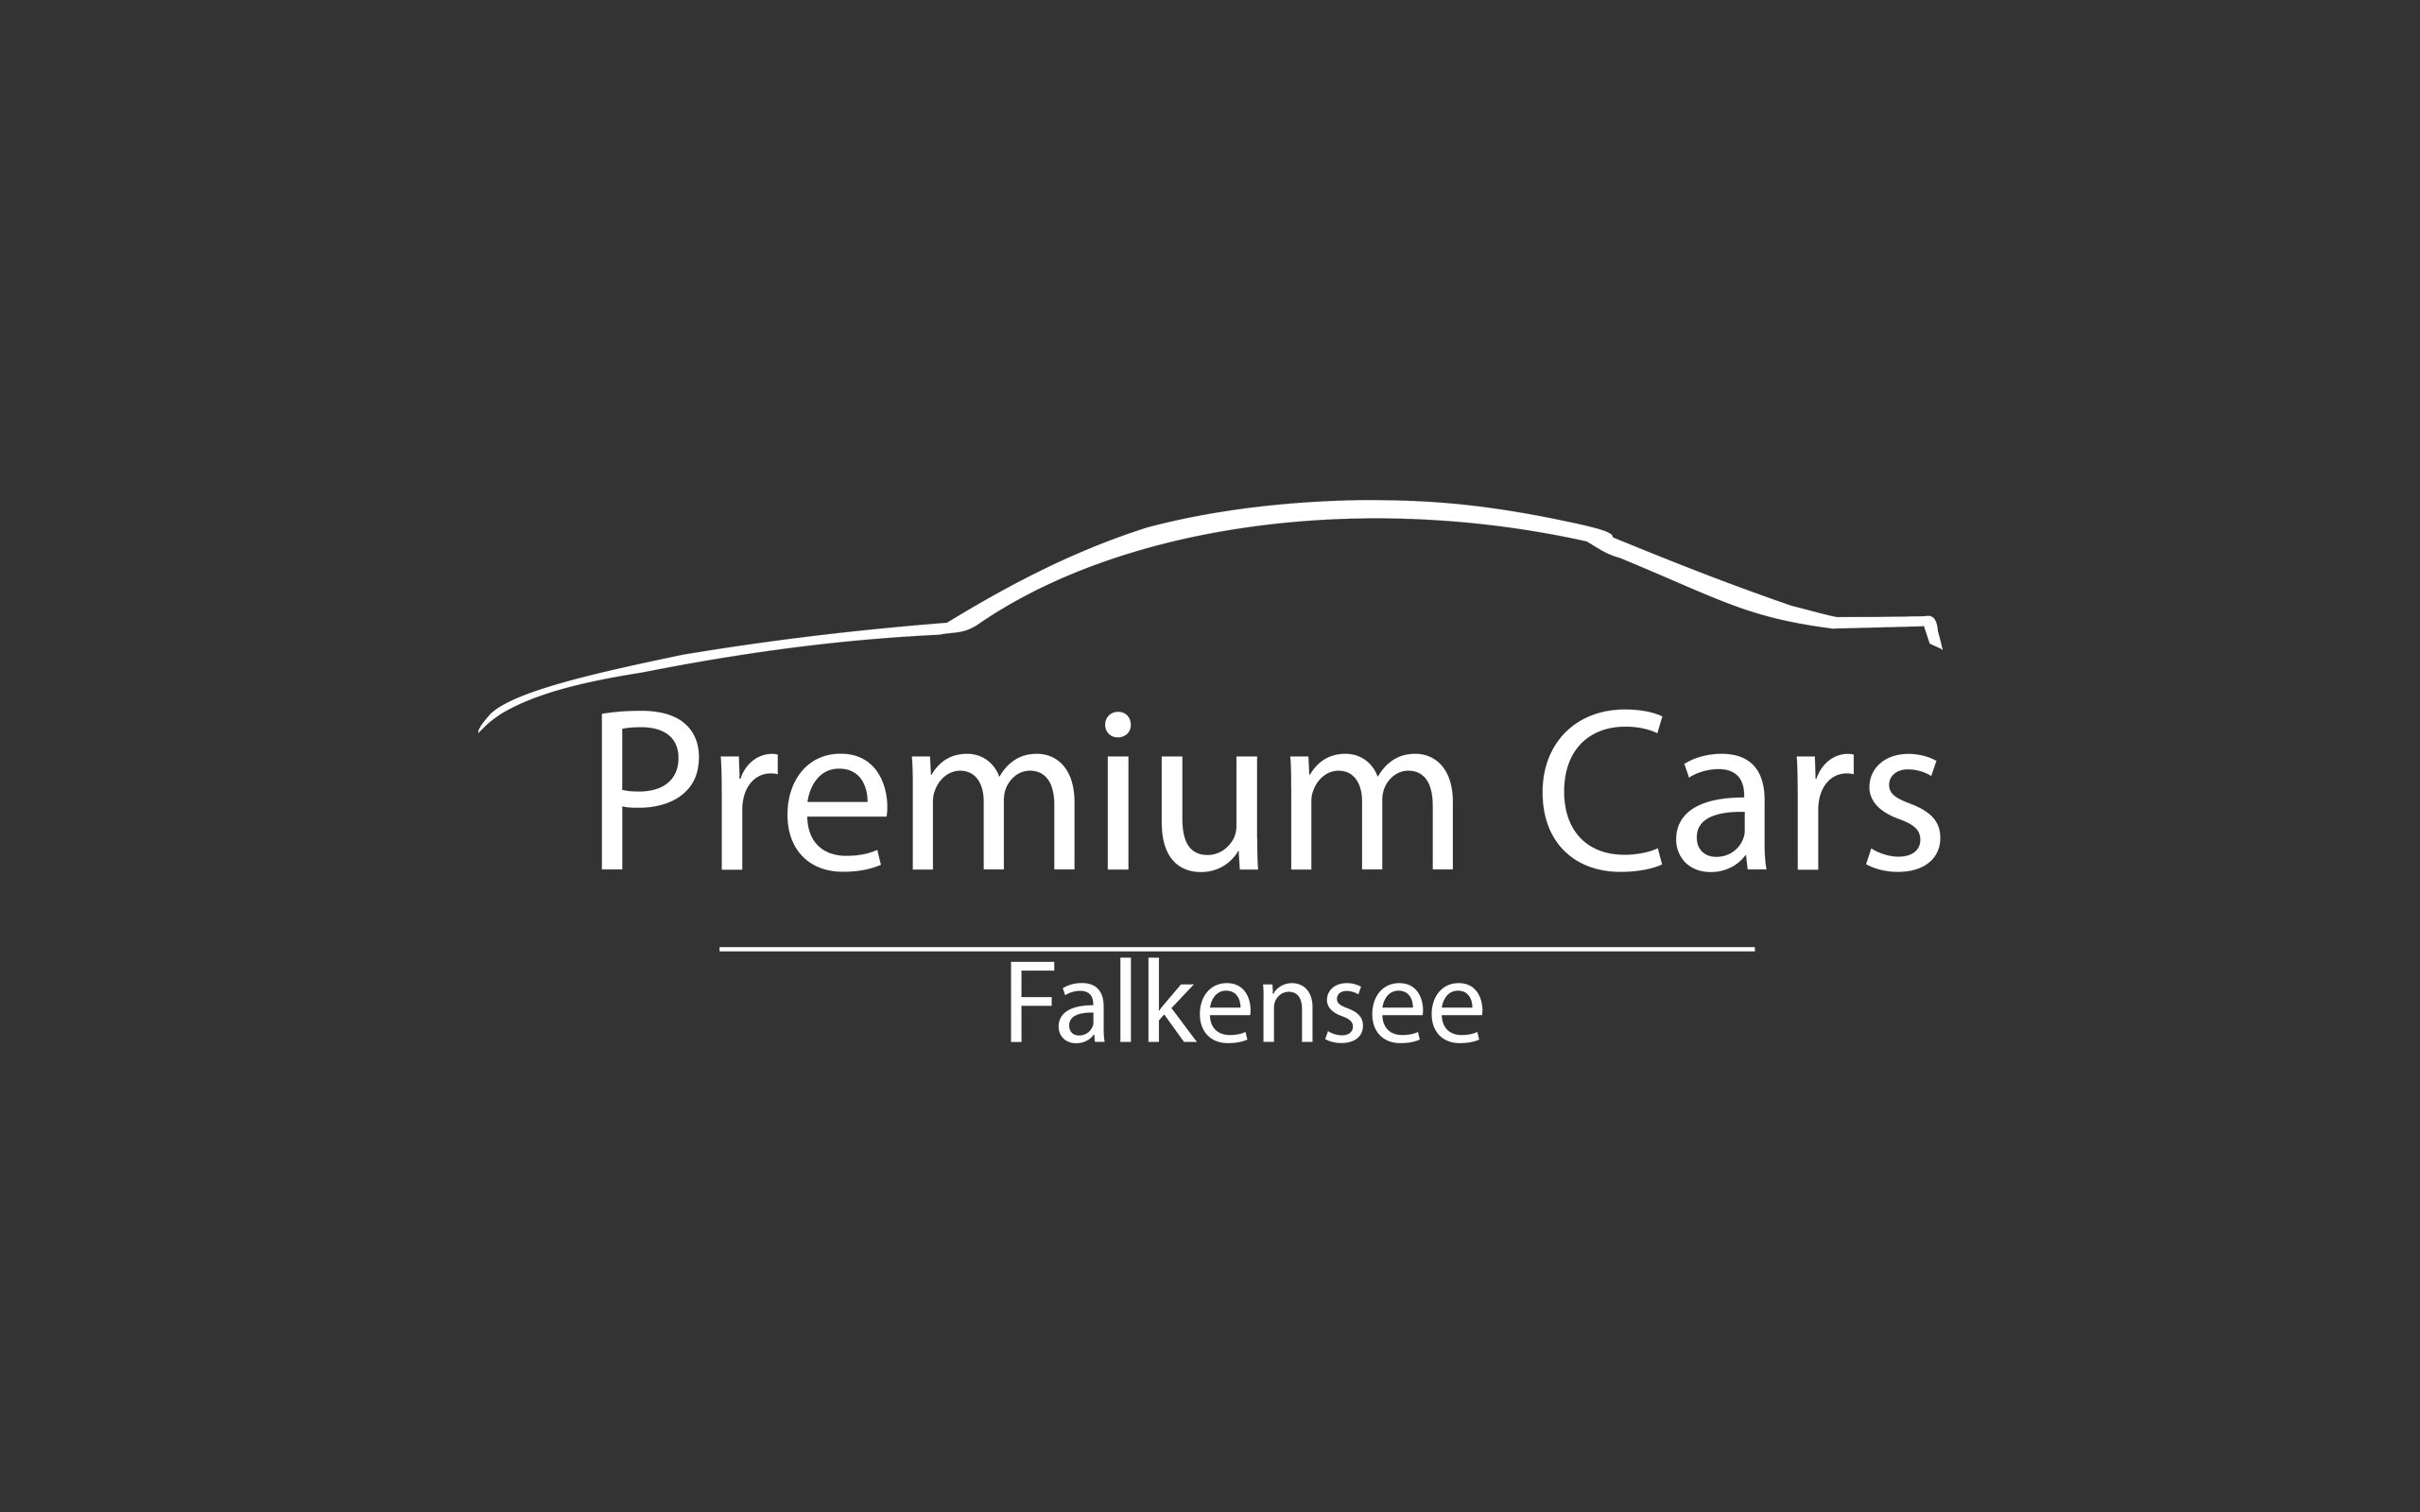 Premium Cars Berbati & Hammes GmbH